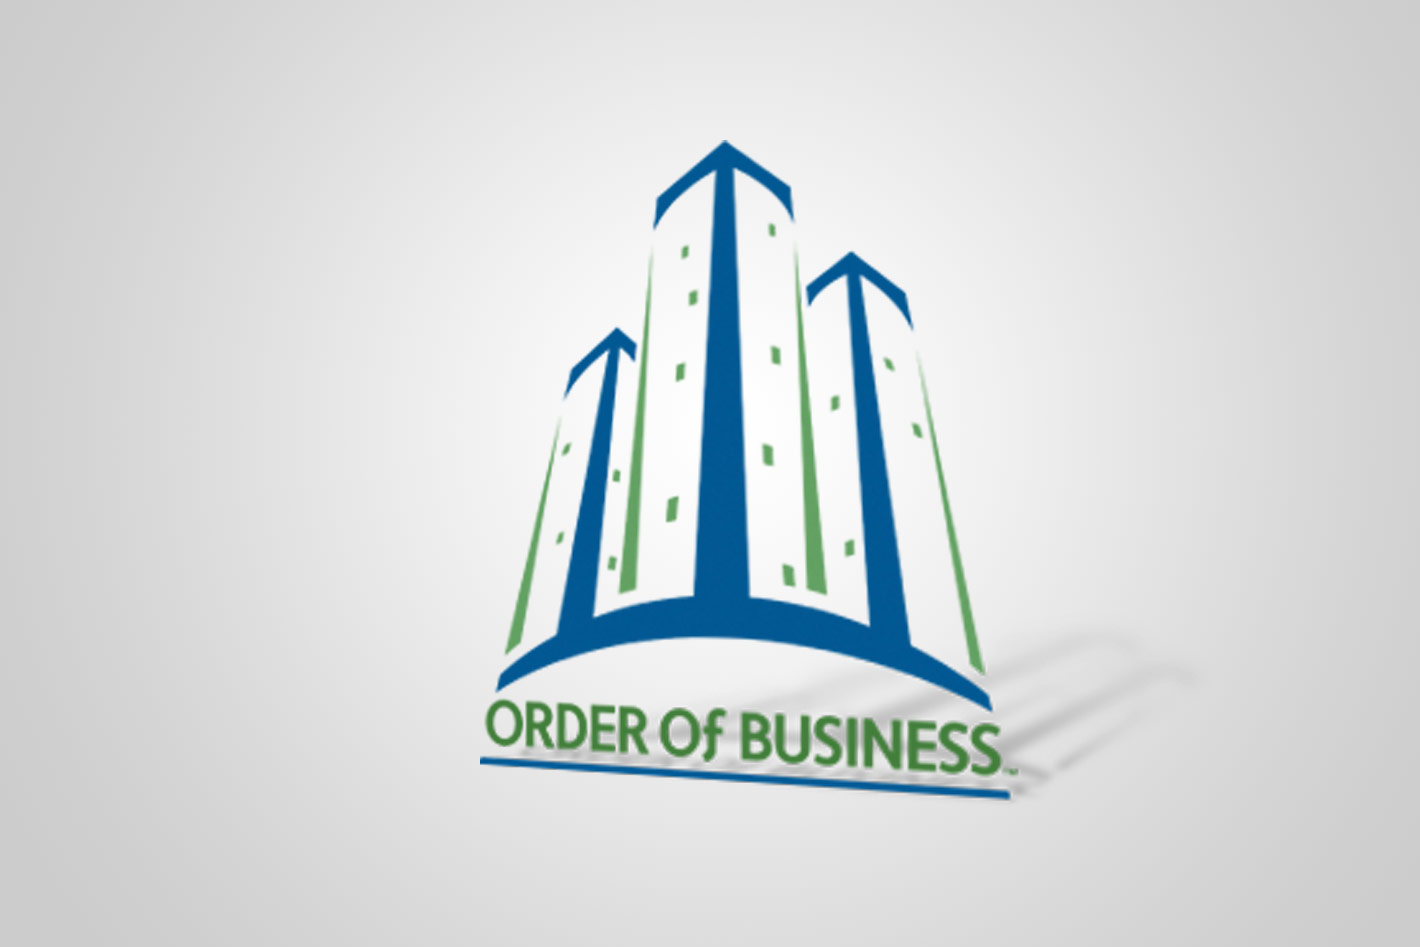 Order of Business logo